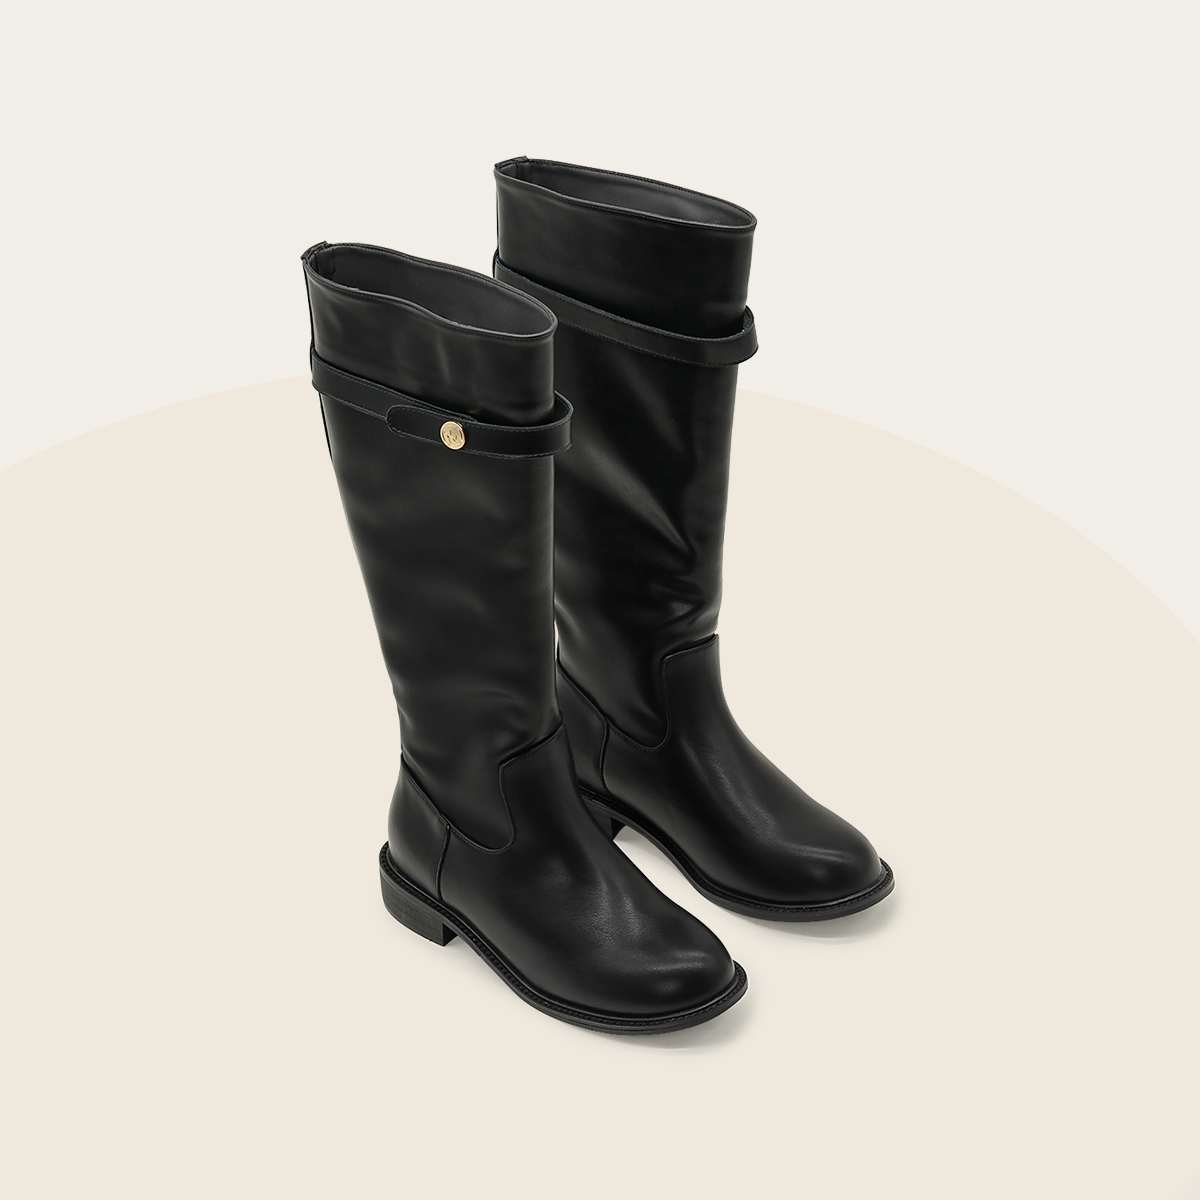 Giày bốt nữ cổ cao KNEE Boots thời trang cao cấp bAimée & bAmor - MS0056